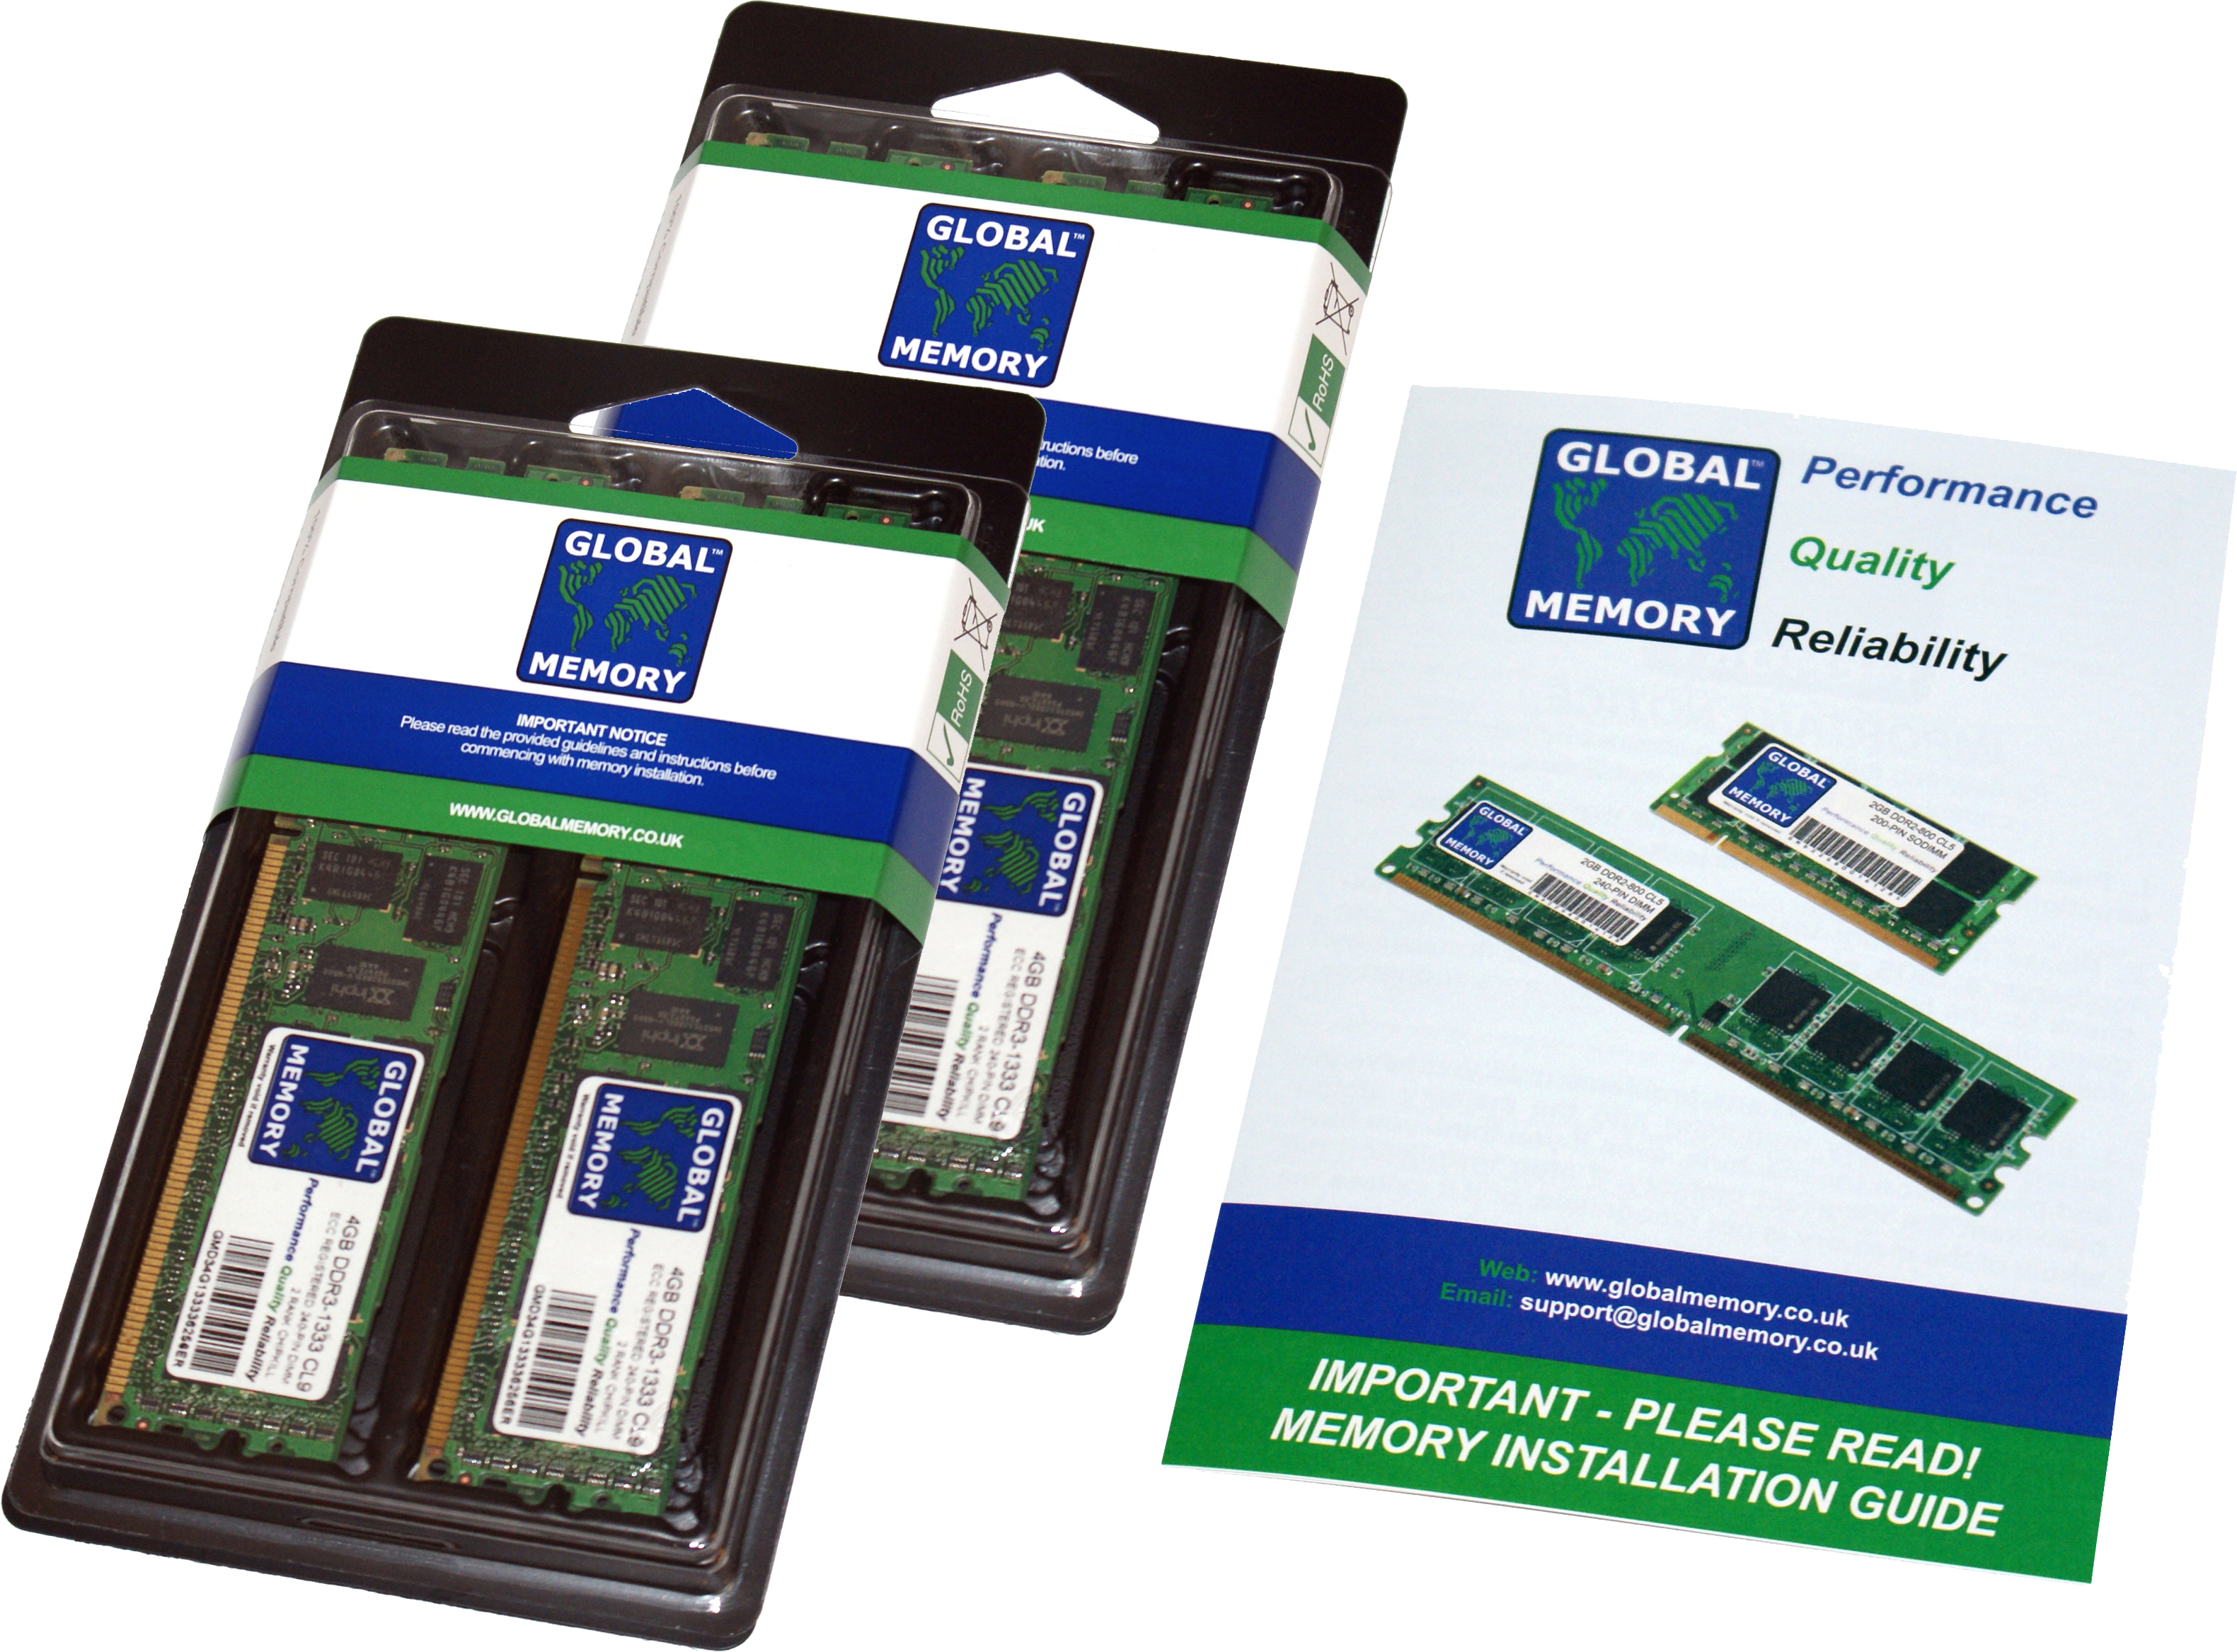 64GB (4 x 16GB) DDR4 2133MHz PC4-17000 288-PIN ECC REGISTERED DIMM (RDIMM) MEMORY RAM KIT FOR DELL SERVERS/WORKSTATIONS (8 RANK KIT CHIPKILL)